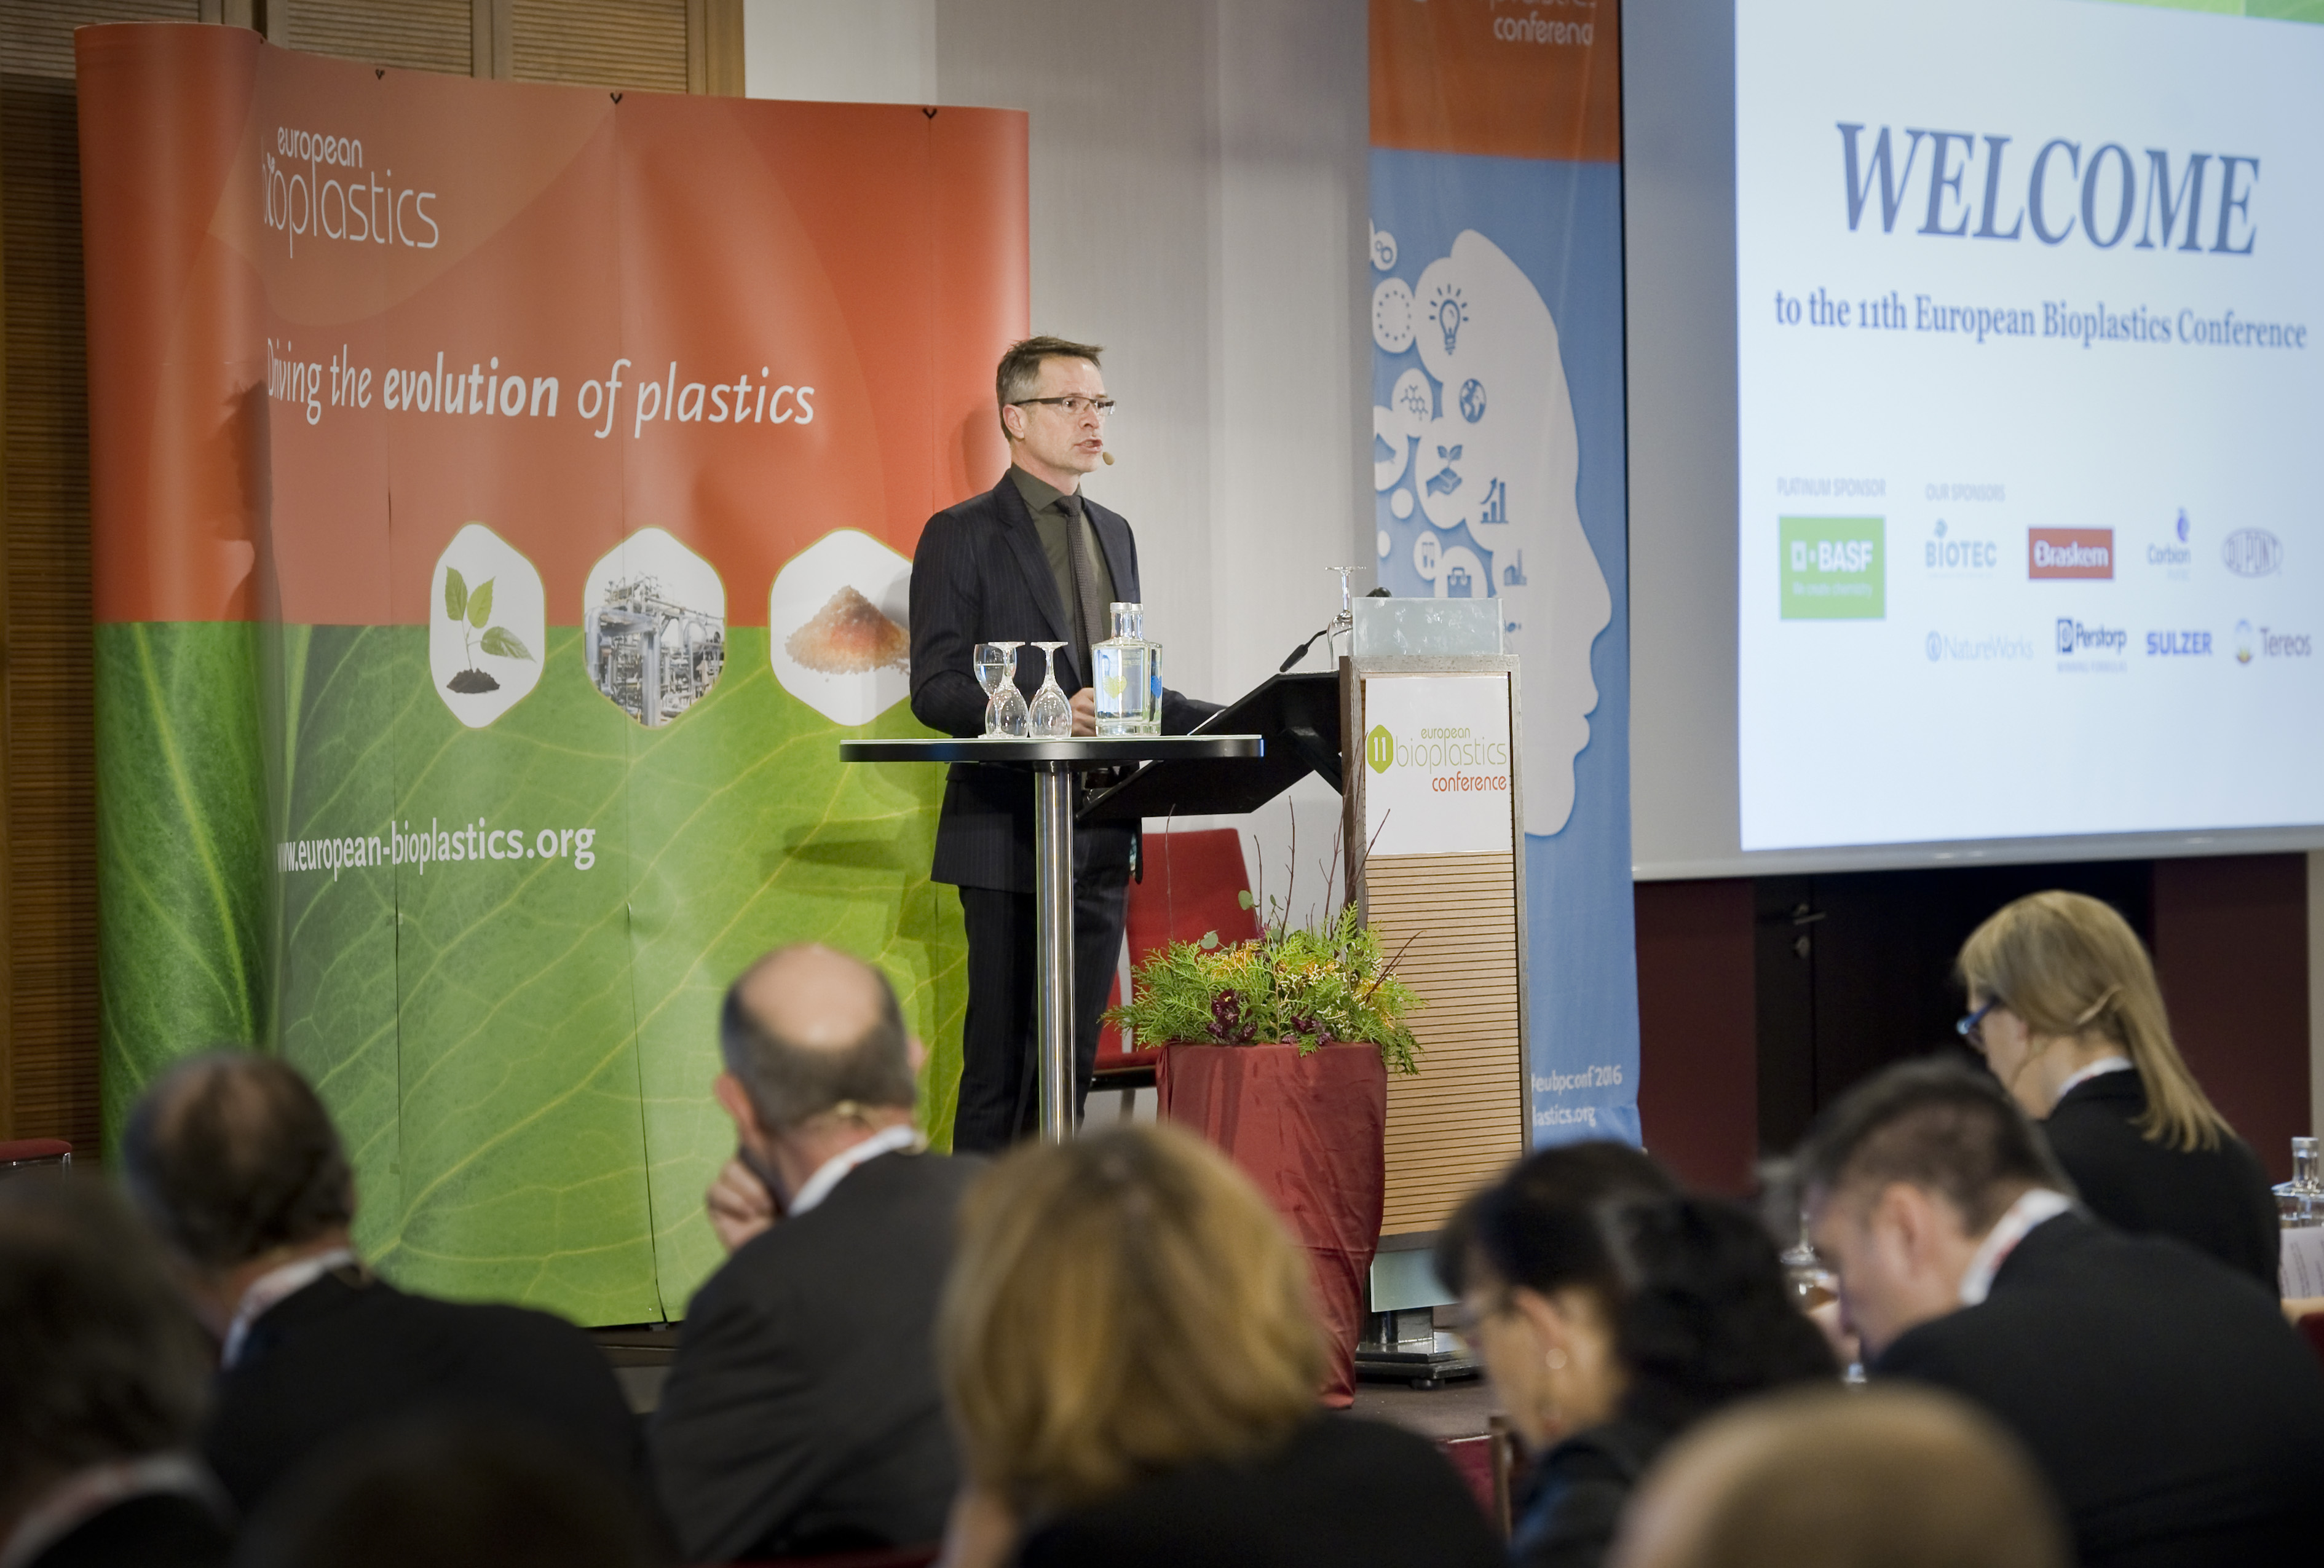 François de Bie, Chairman of European Bioplastics, welcoming around 300 participants to the 11th European Bioplastics Conference 2016 (c) European Bioplastics